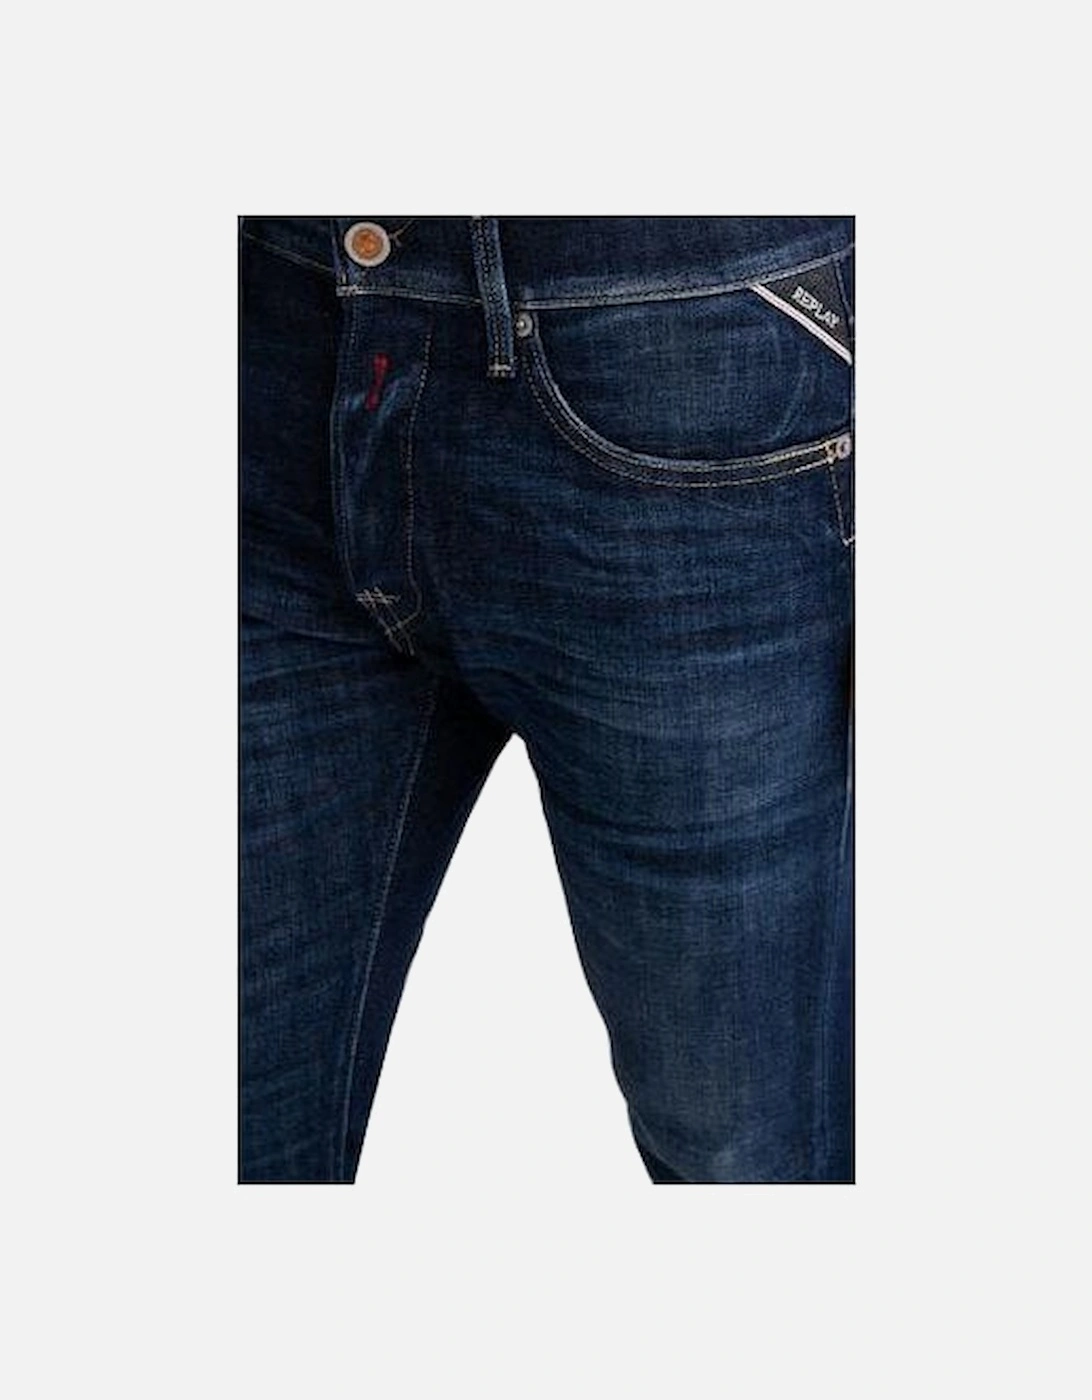 Men's Waitom Regular Fit Jeans.